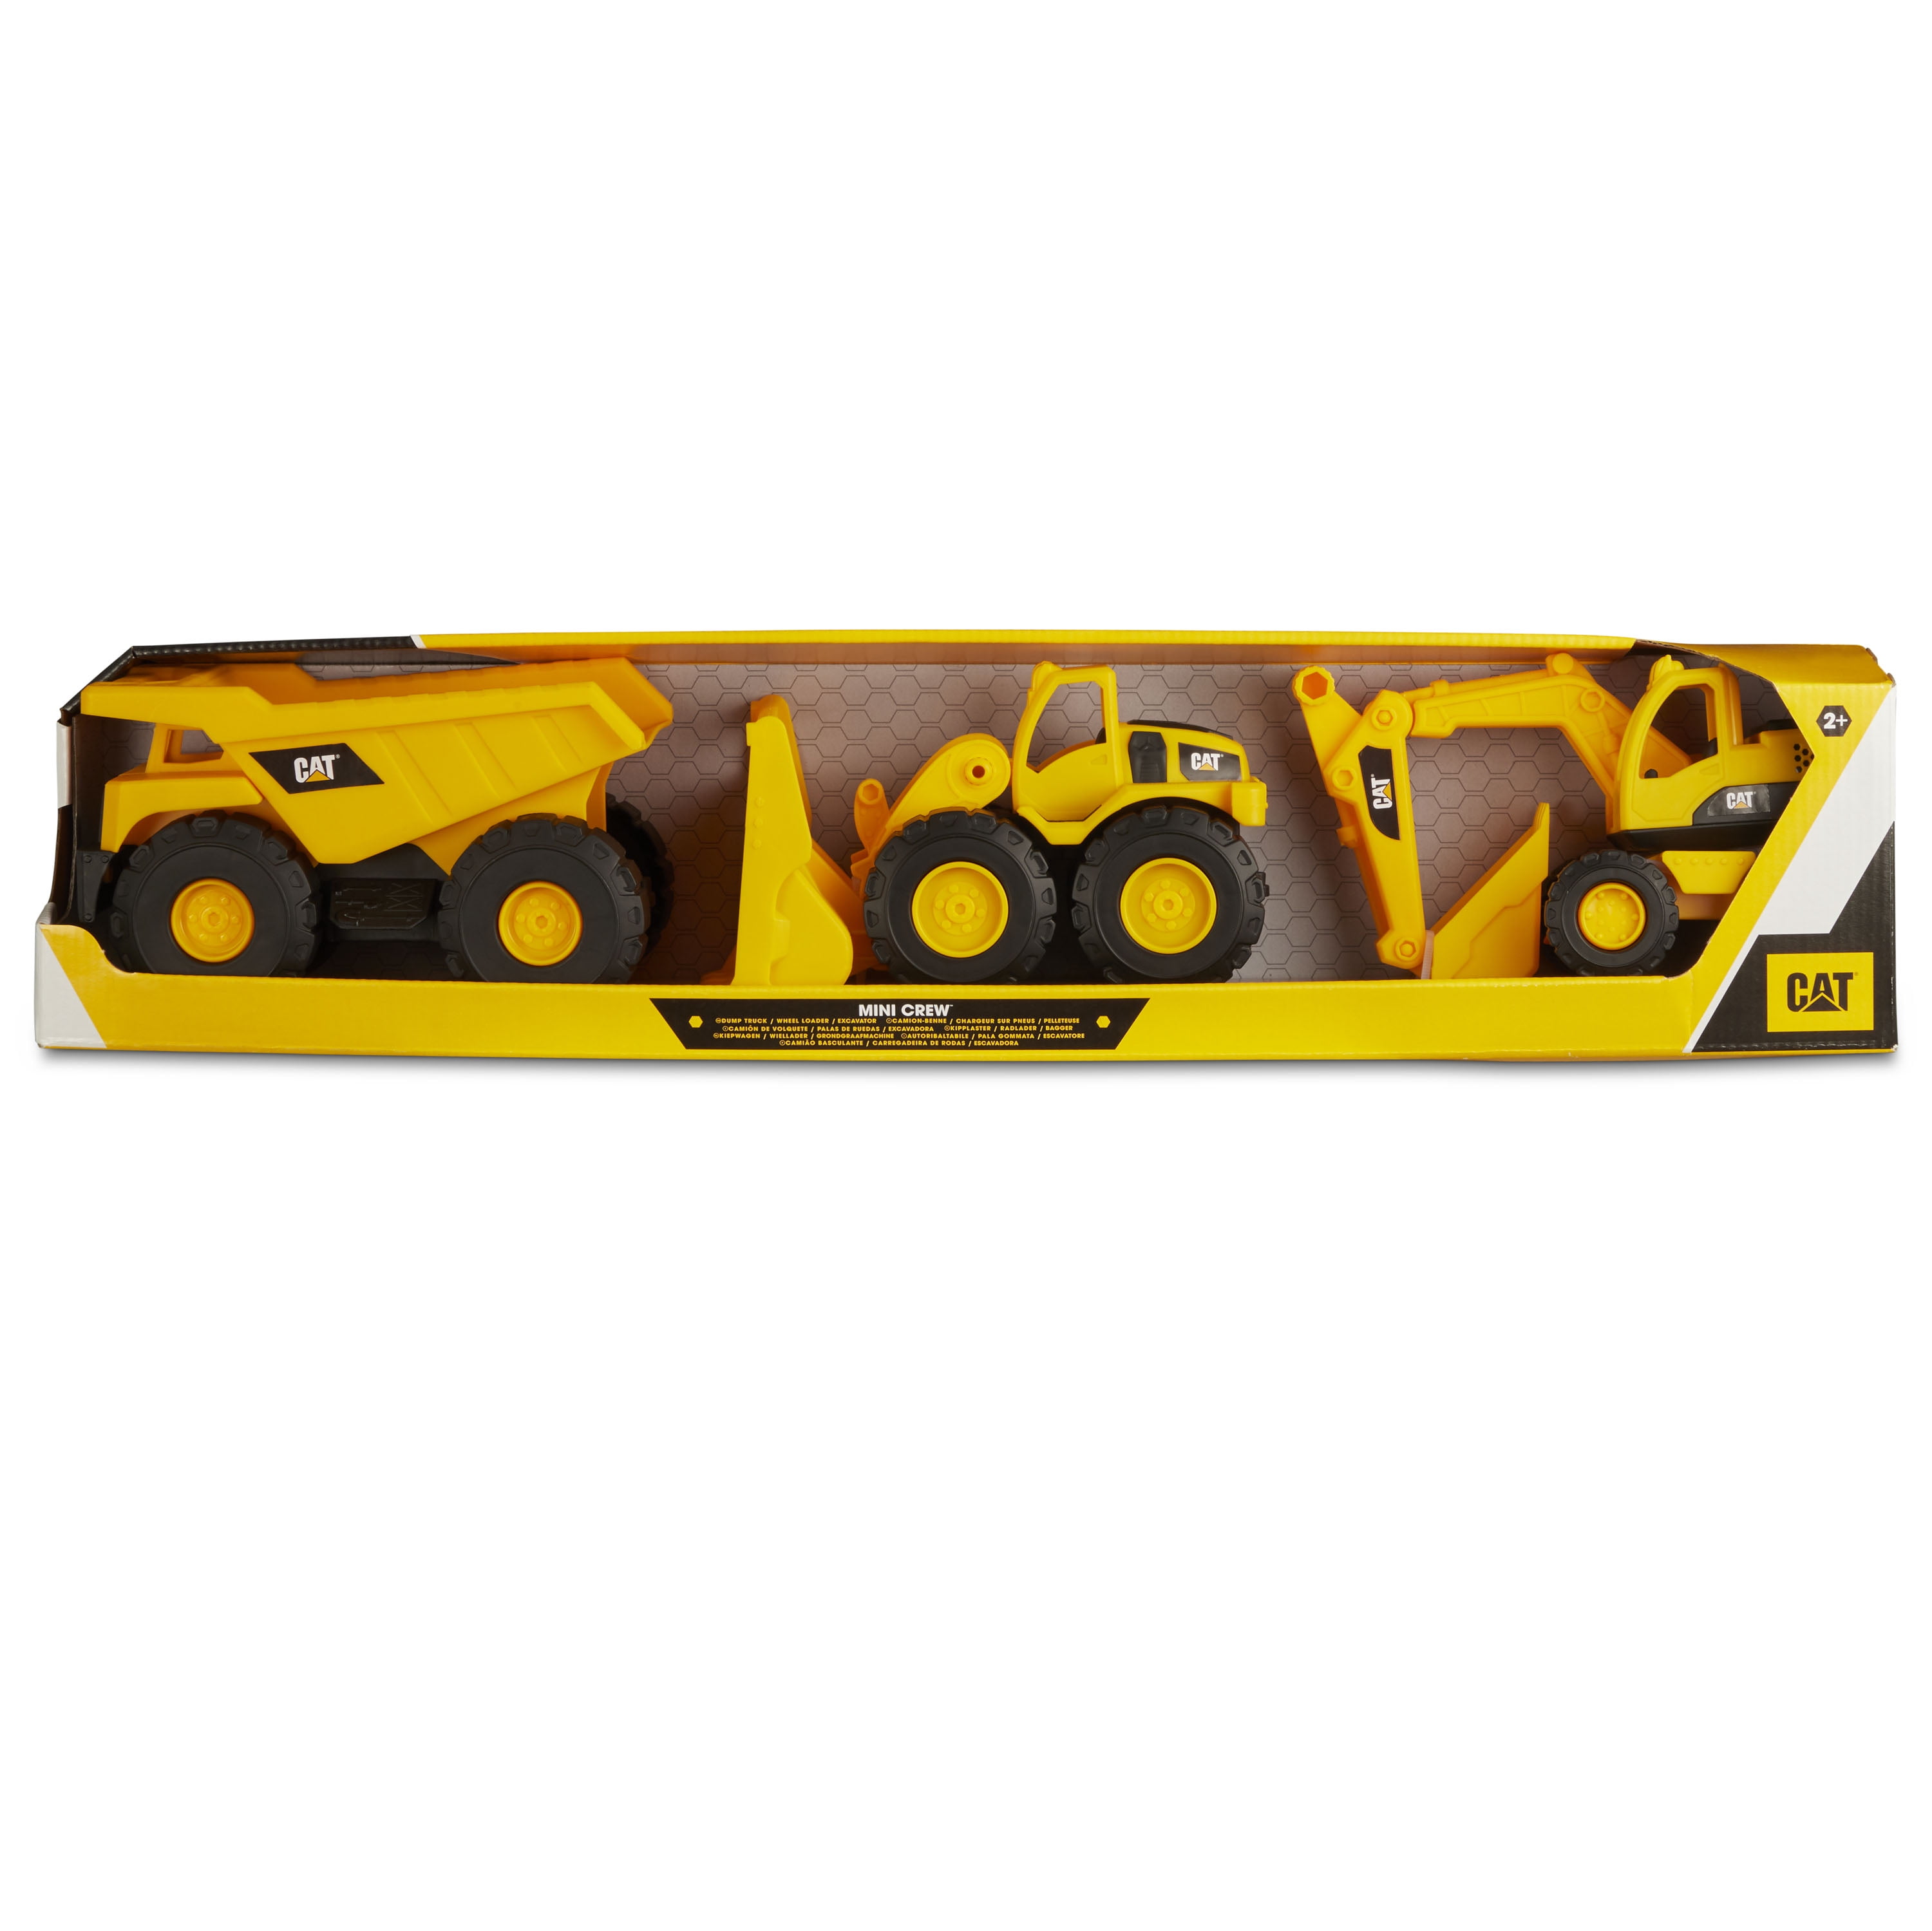 Cat Construction 7" Dump Truck Loader & Excavator toys Mini Crew Combo Pack 